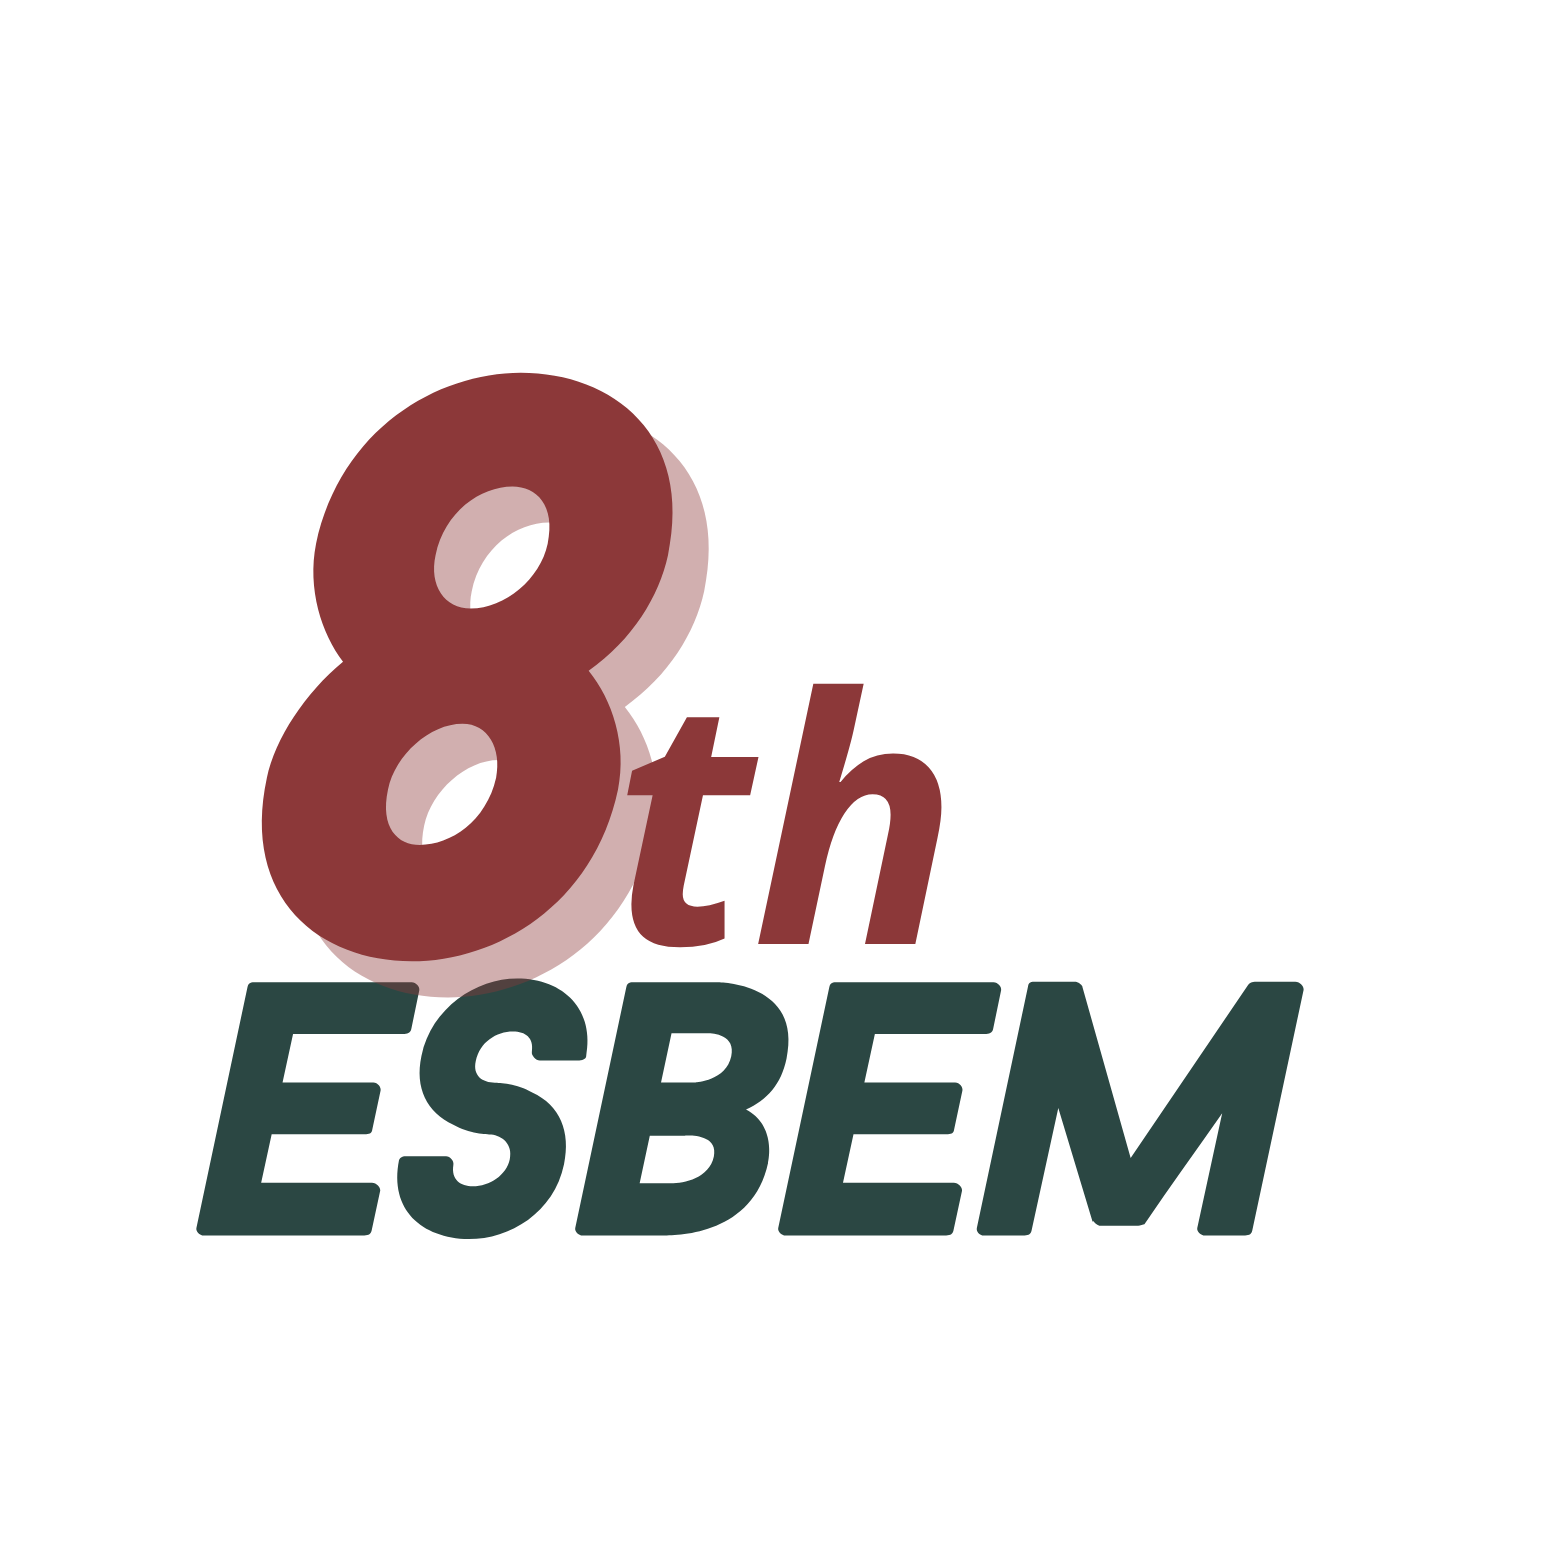 8th International Conference on Entrepreneurship Studies, Business, Economy, and Management Science (8th ESBEM)